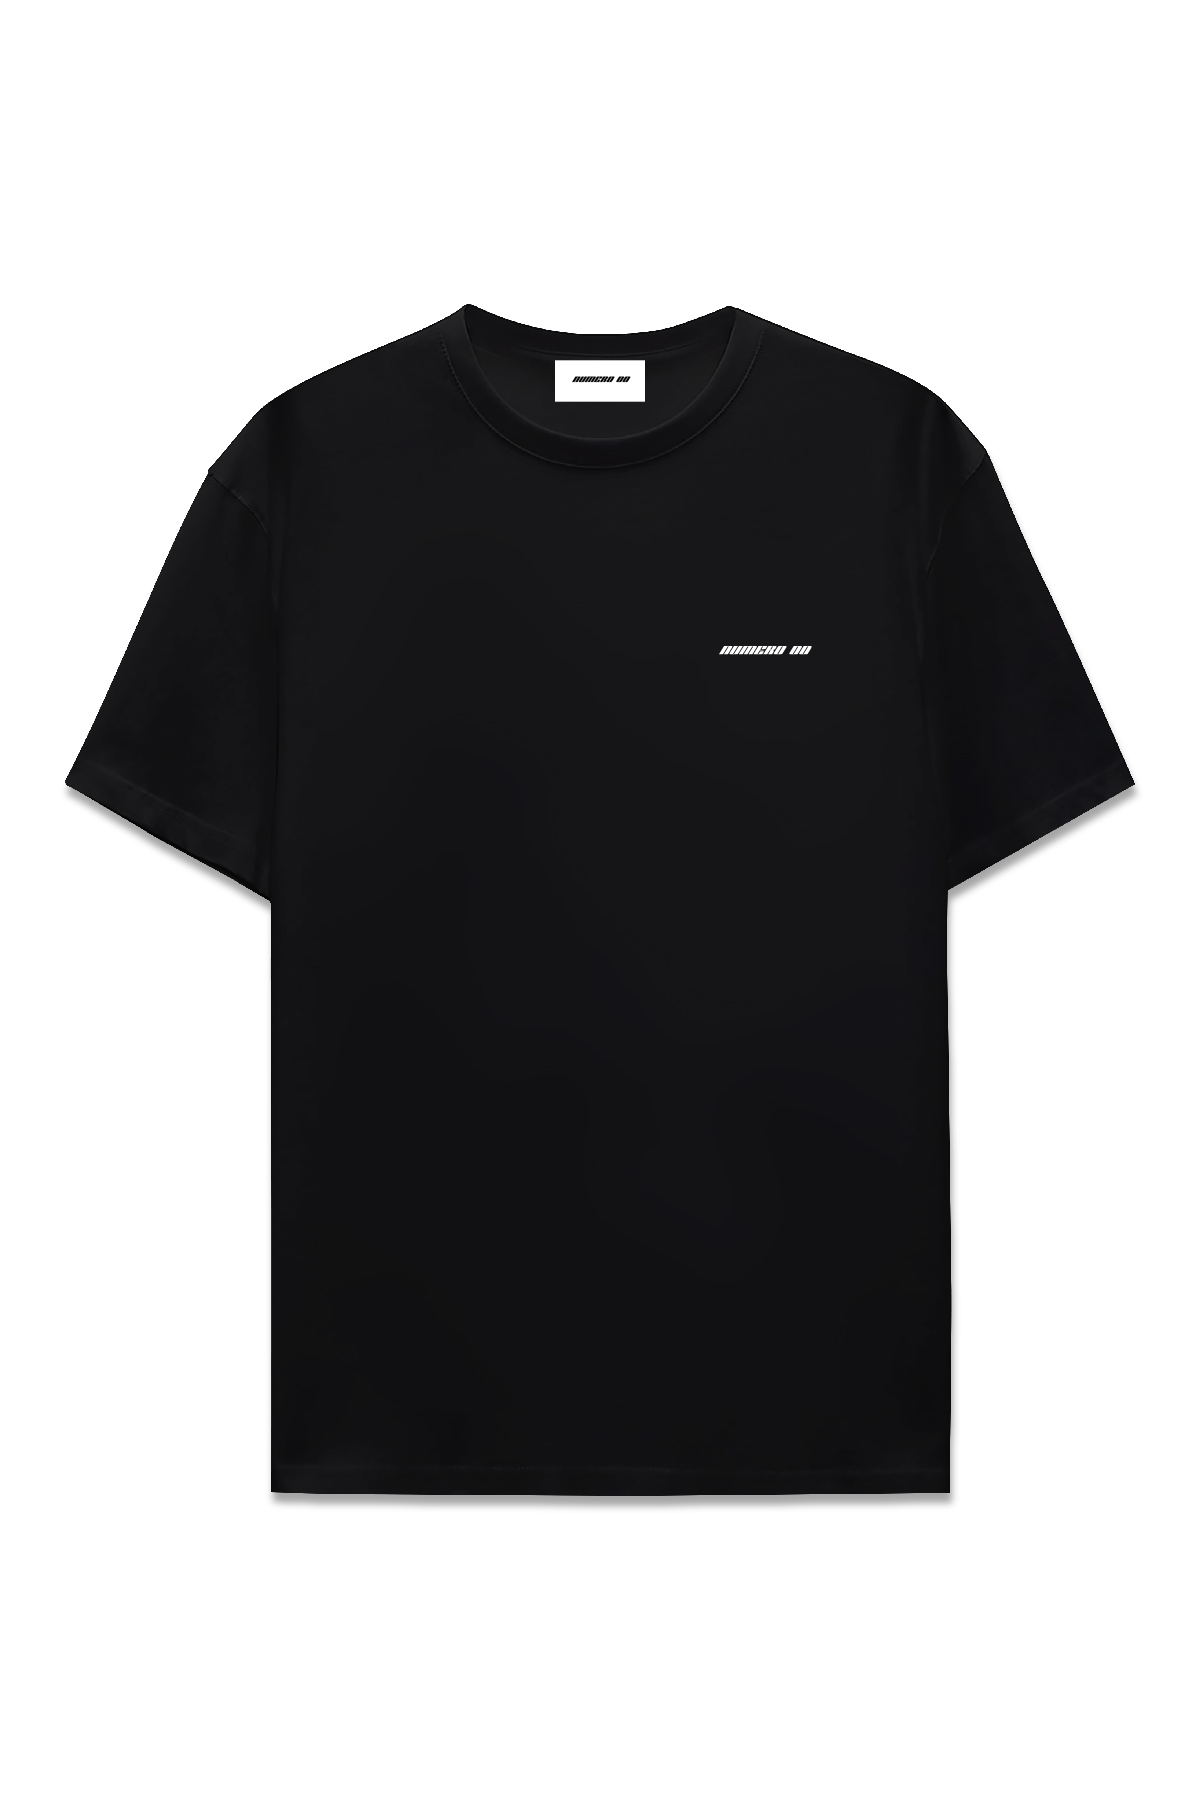 n00 custom t-shirt - Numero00